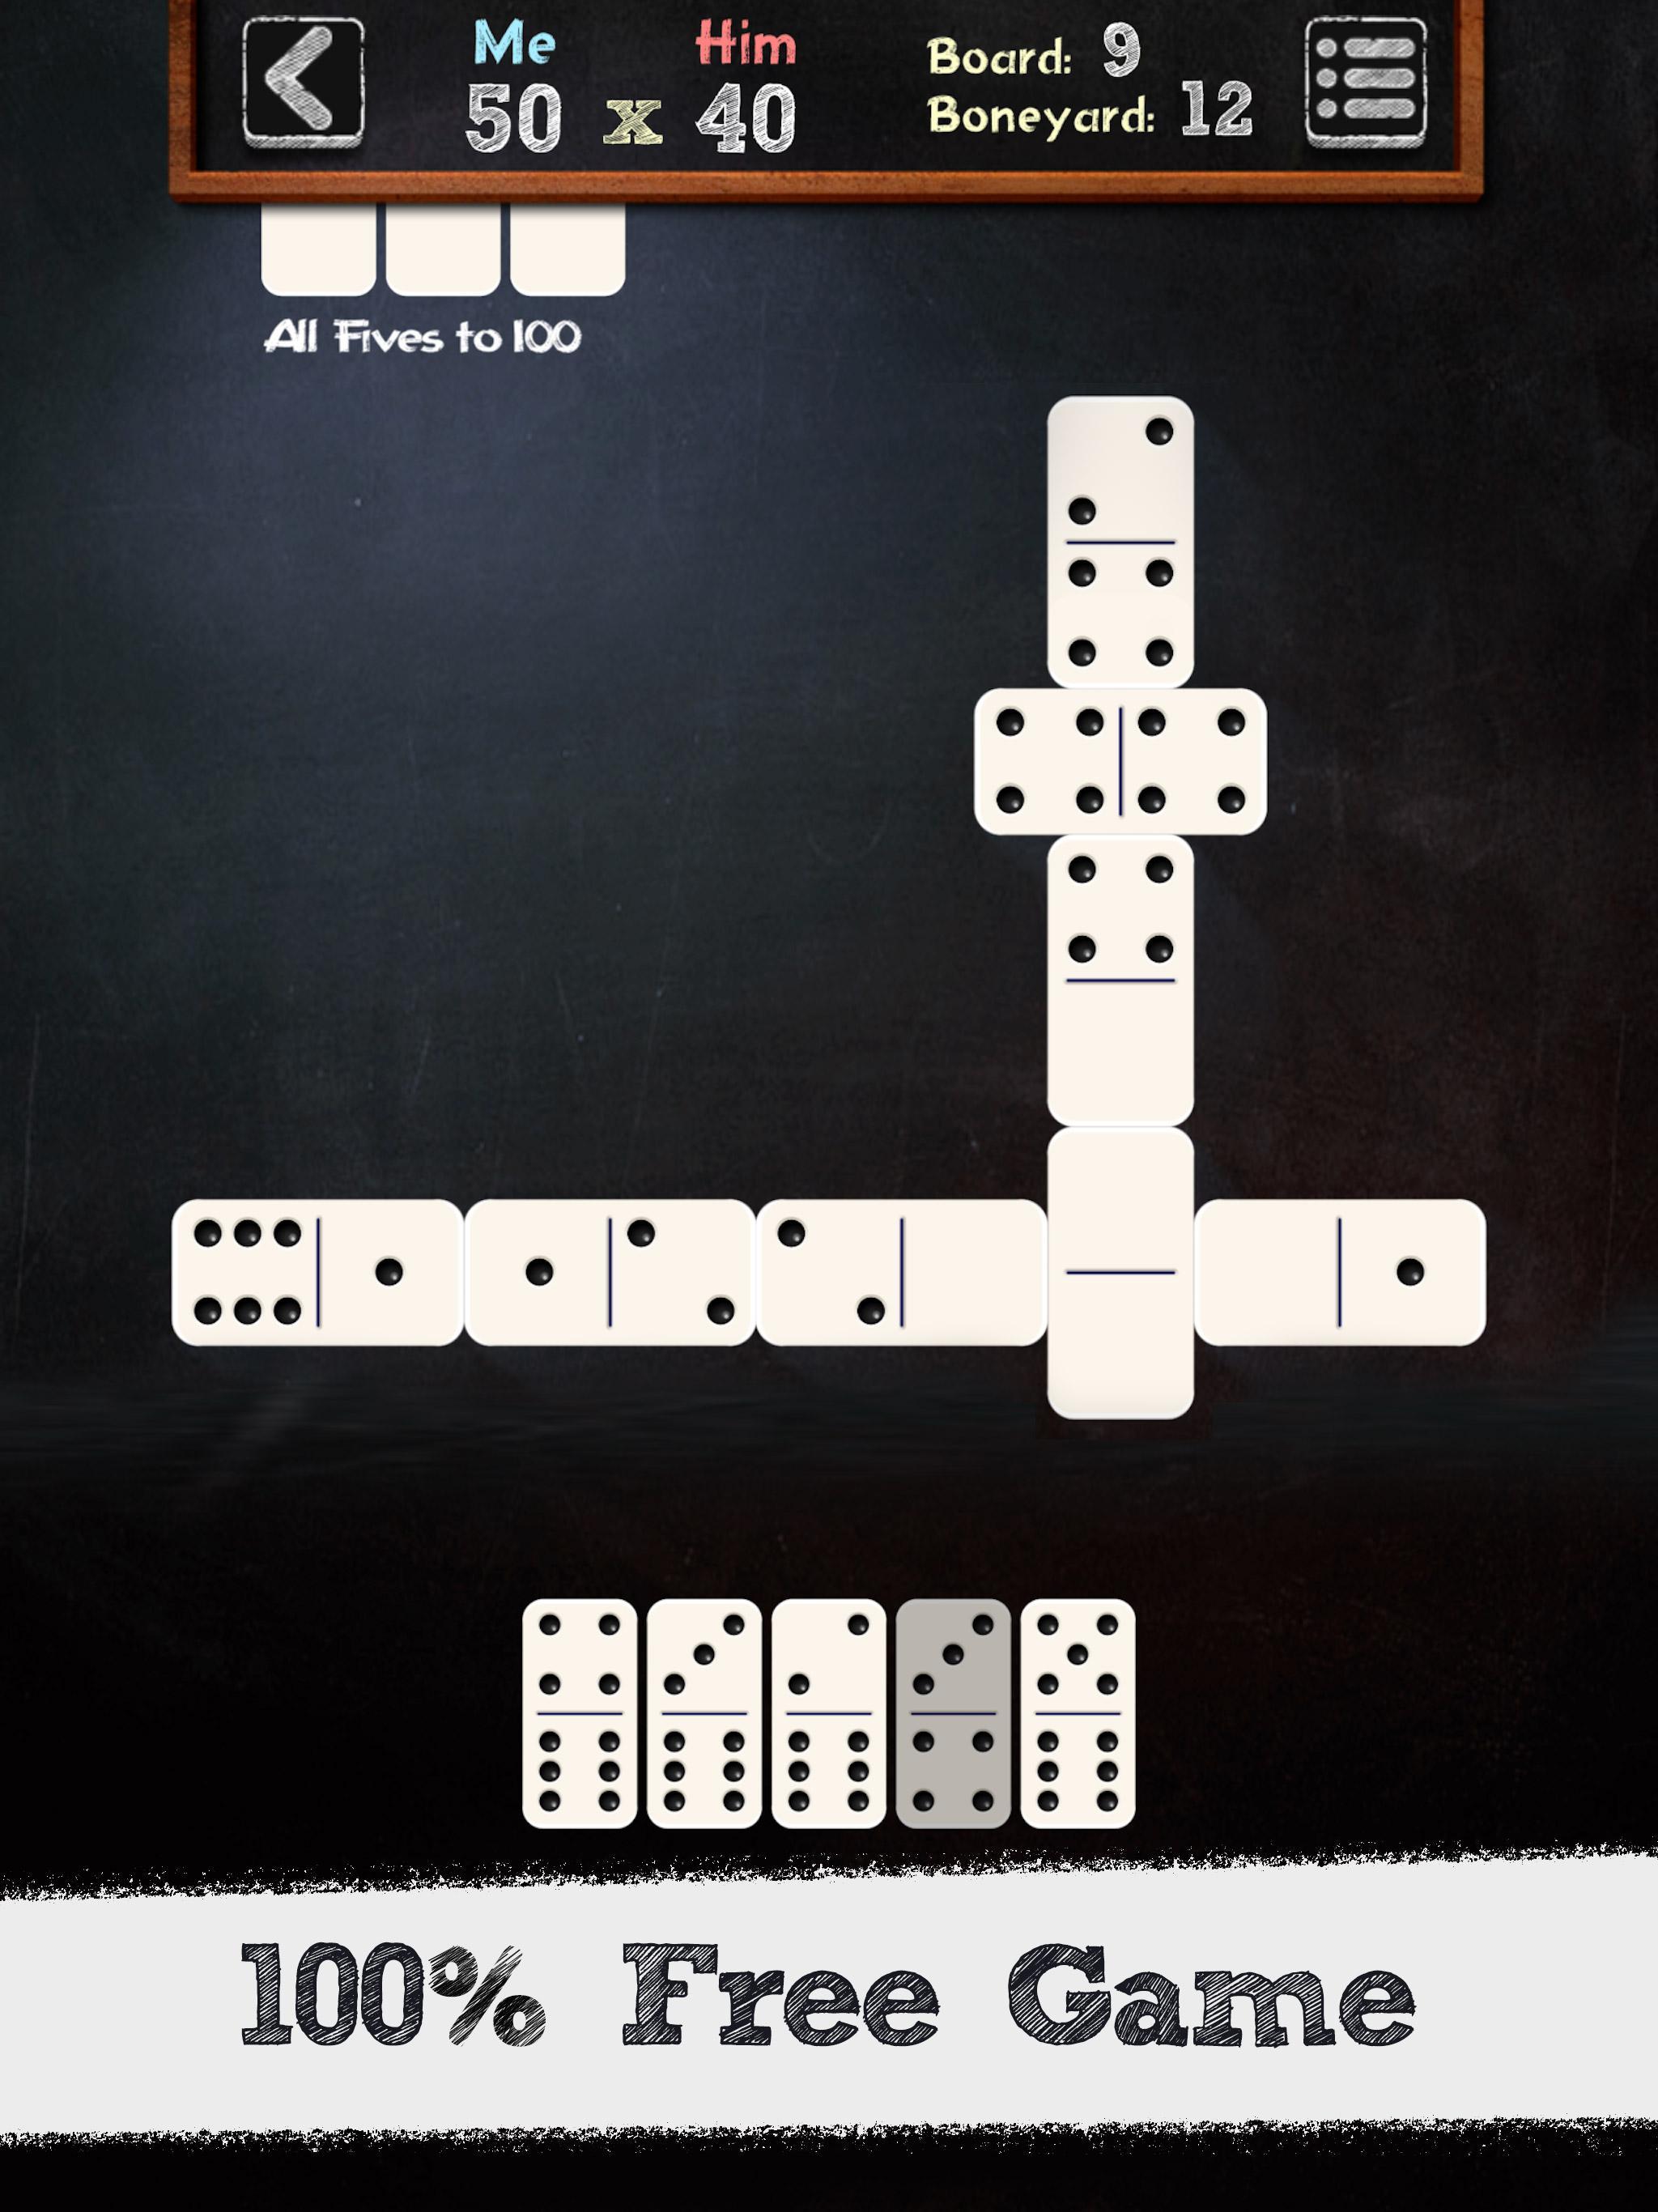 Dominoes - Classic dominos game 게임 스크린 샷